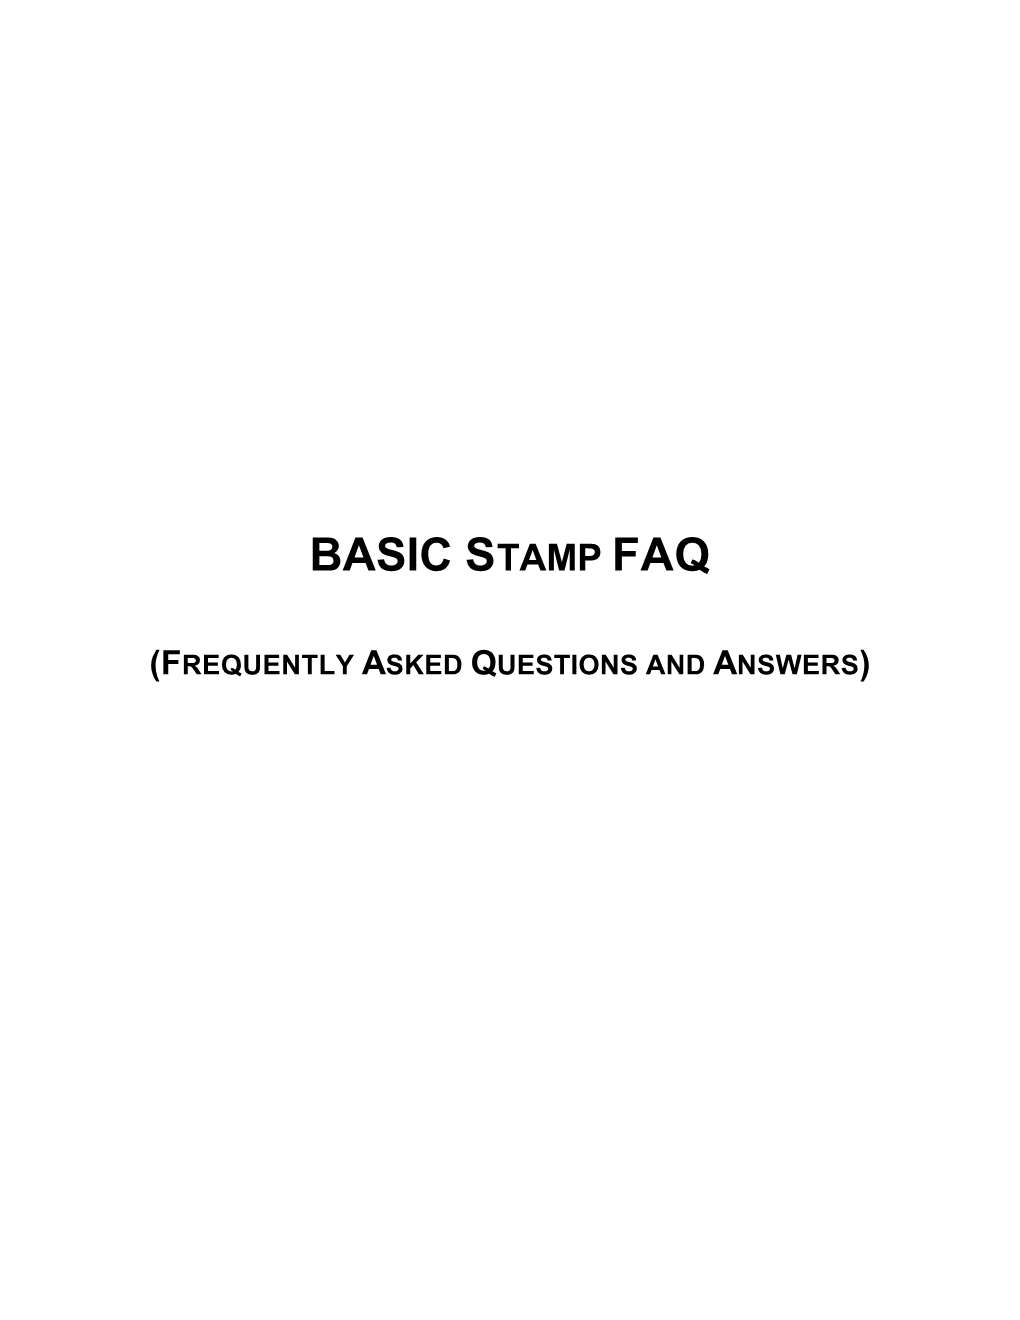 Basic Stamp Faq